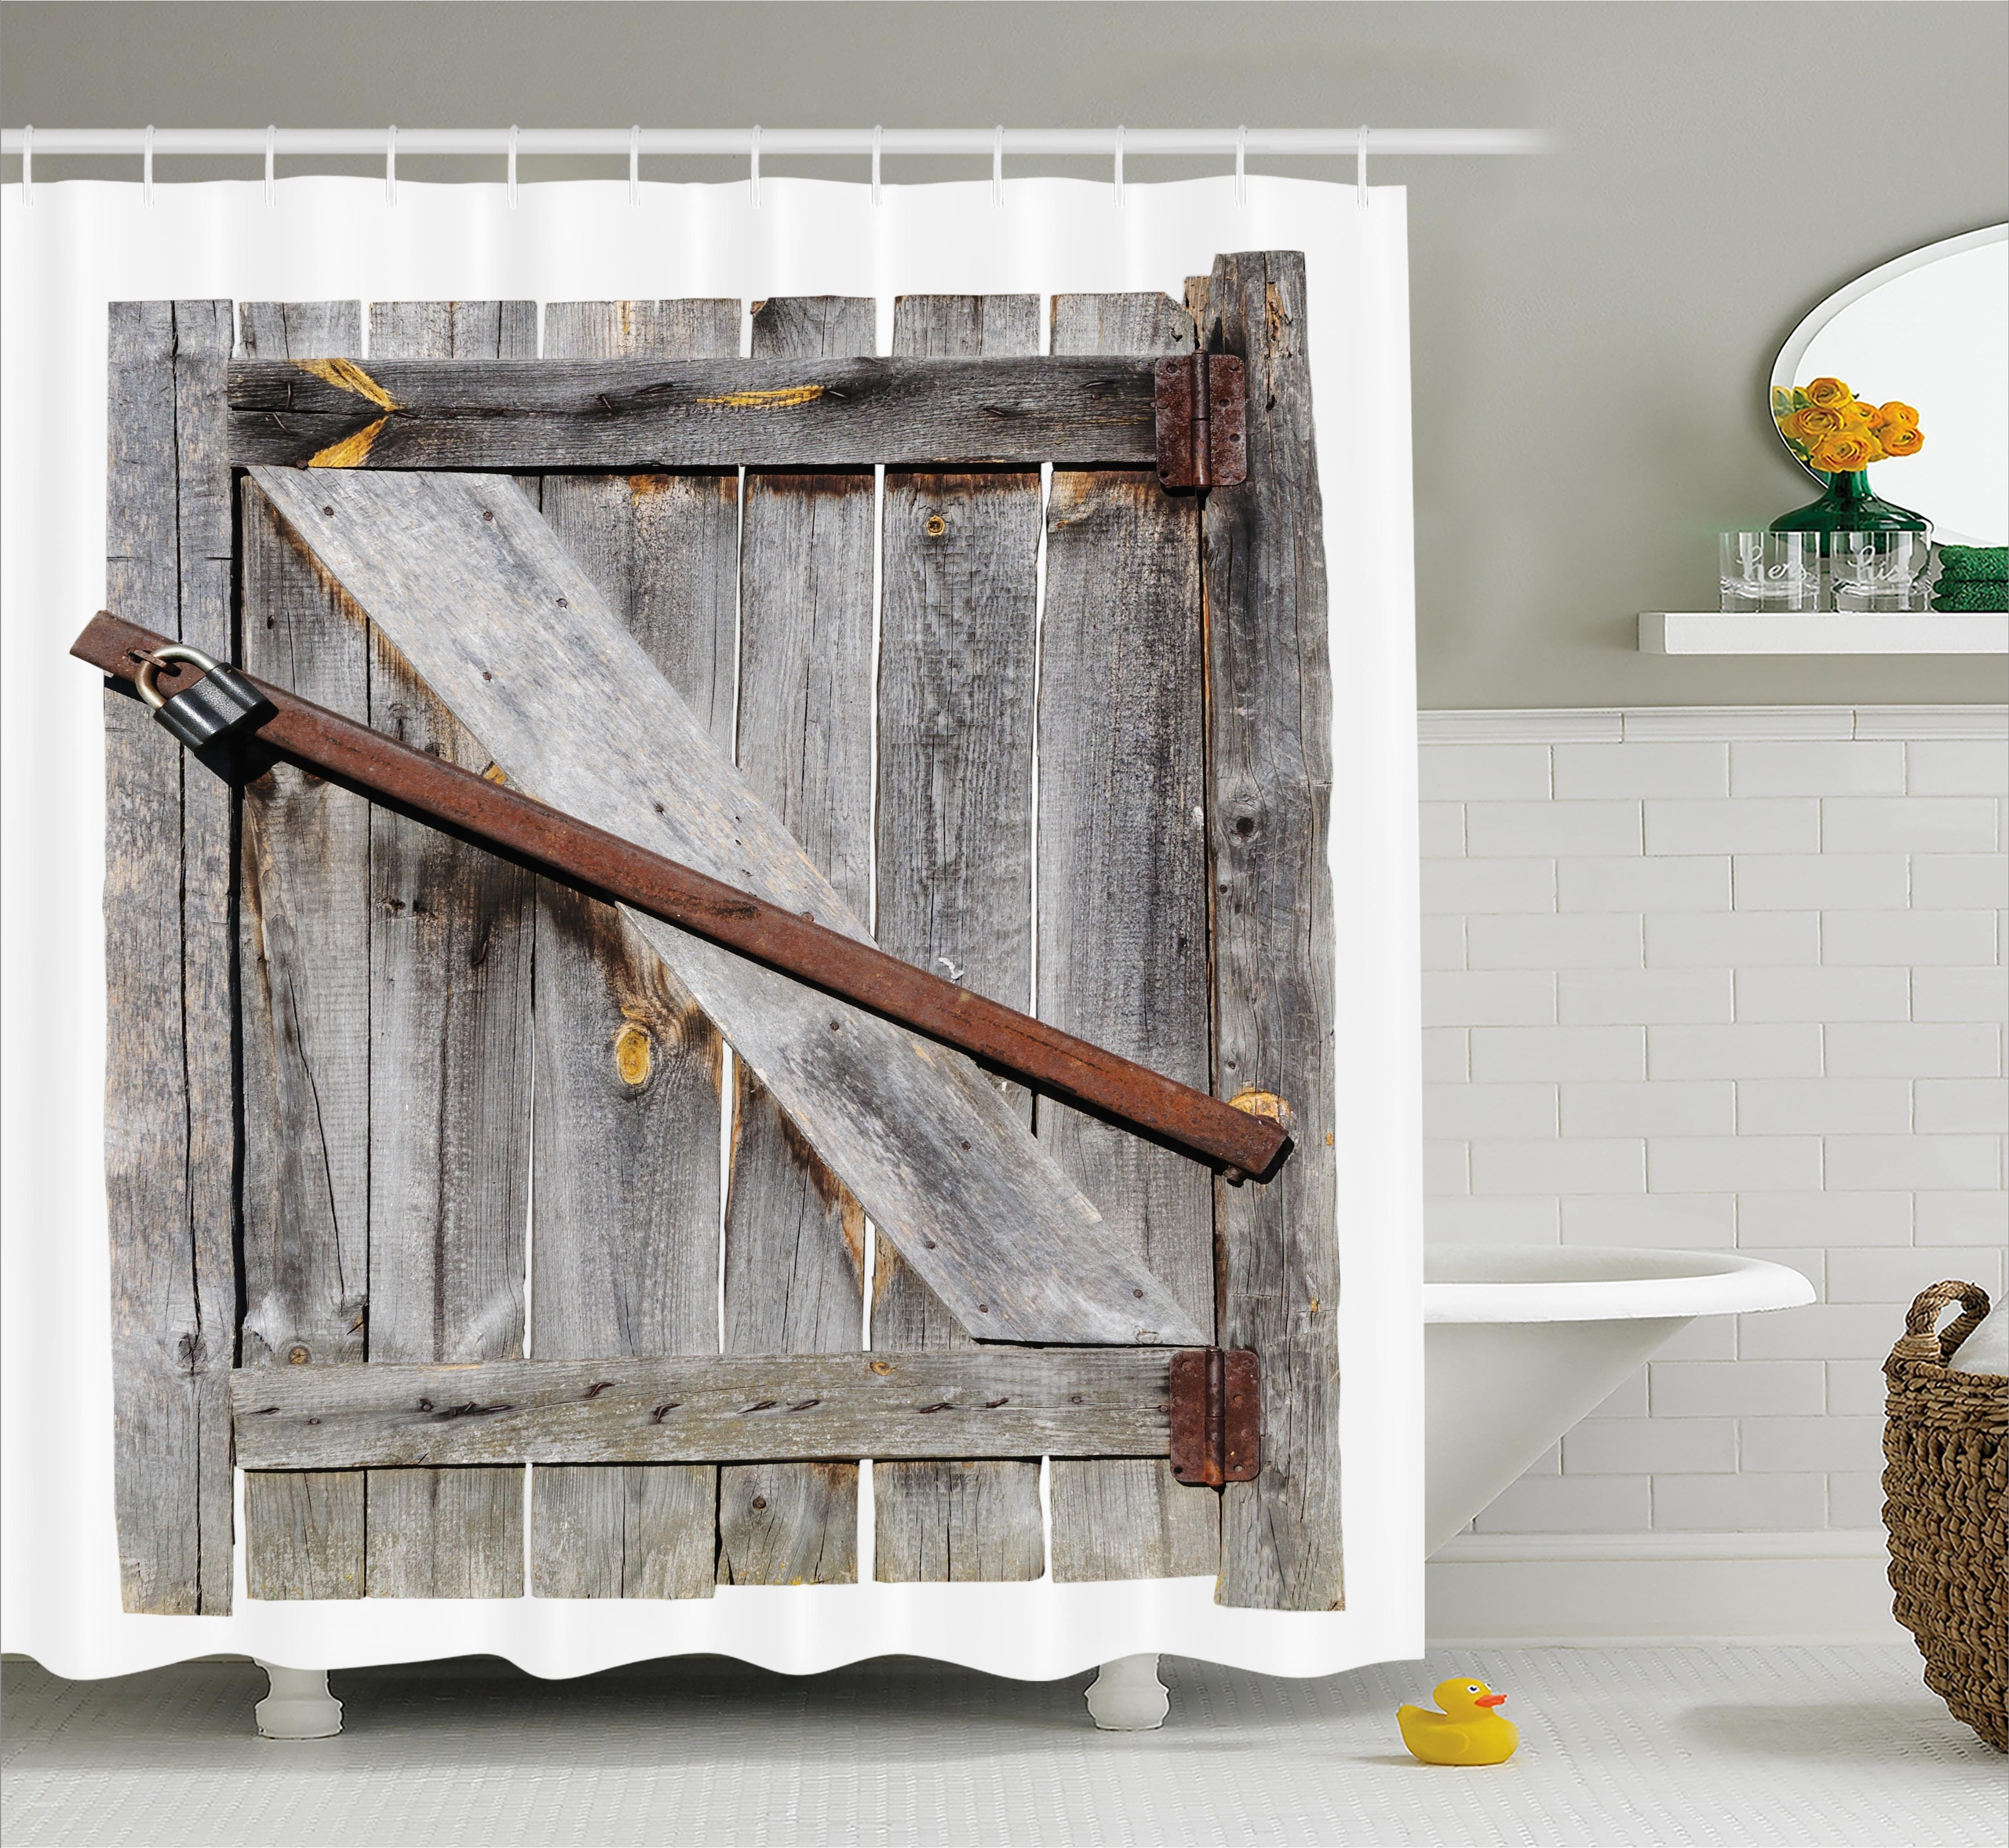 Rustic Shower Curtain Wooden Barn Door Image Print for Bathroom 